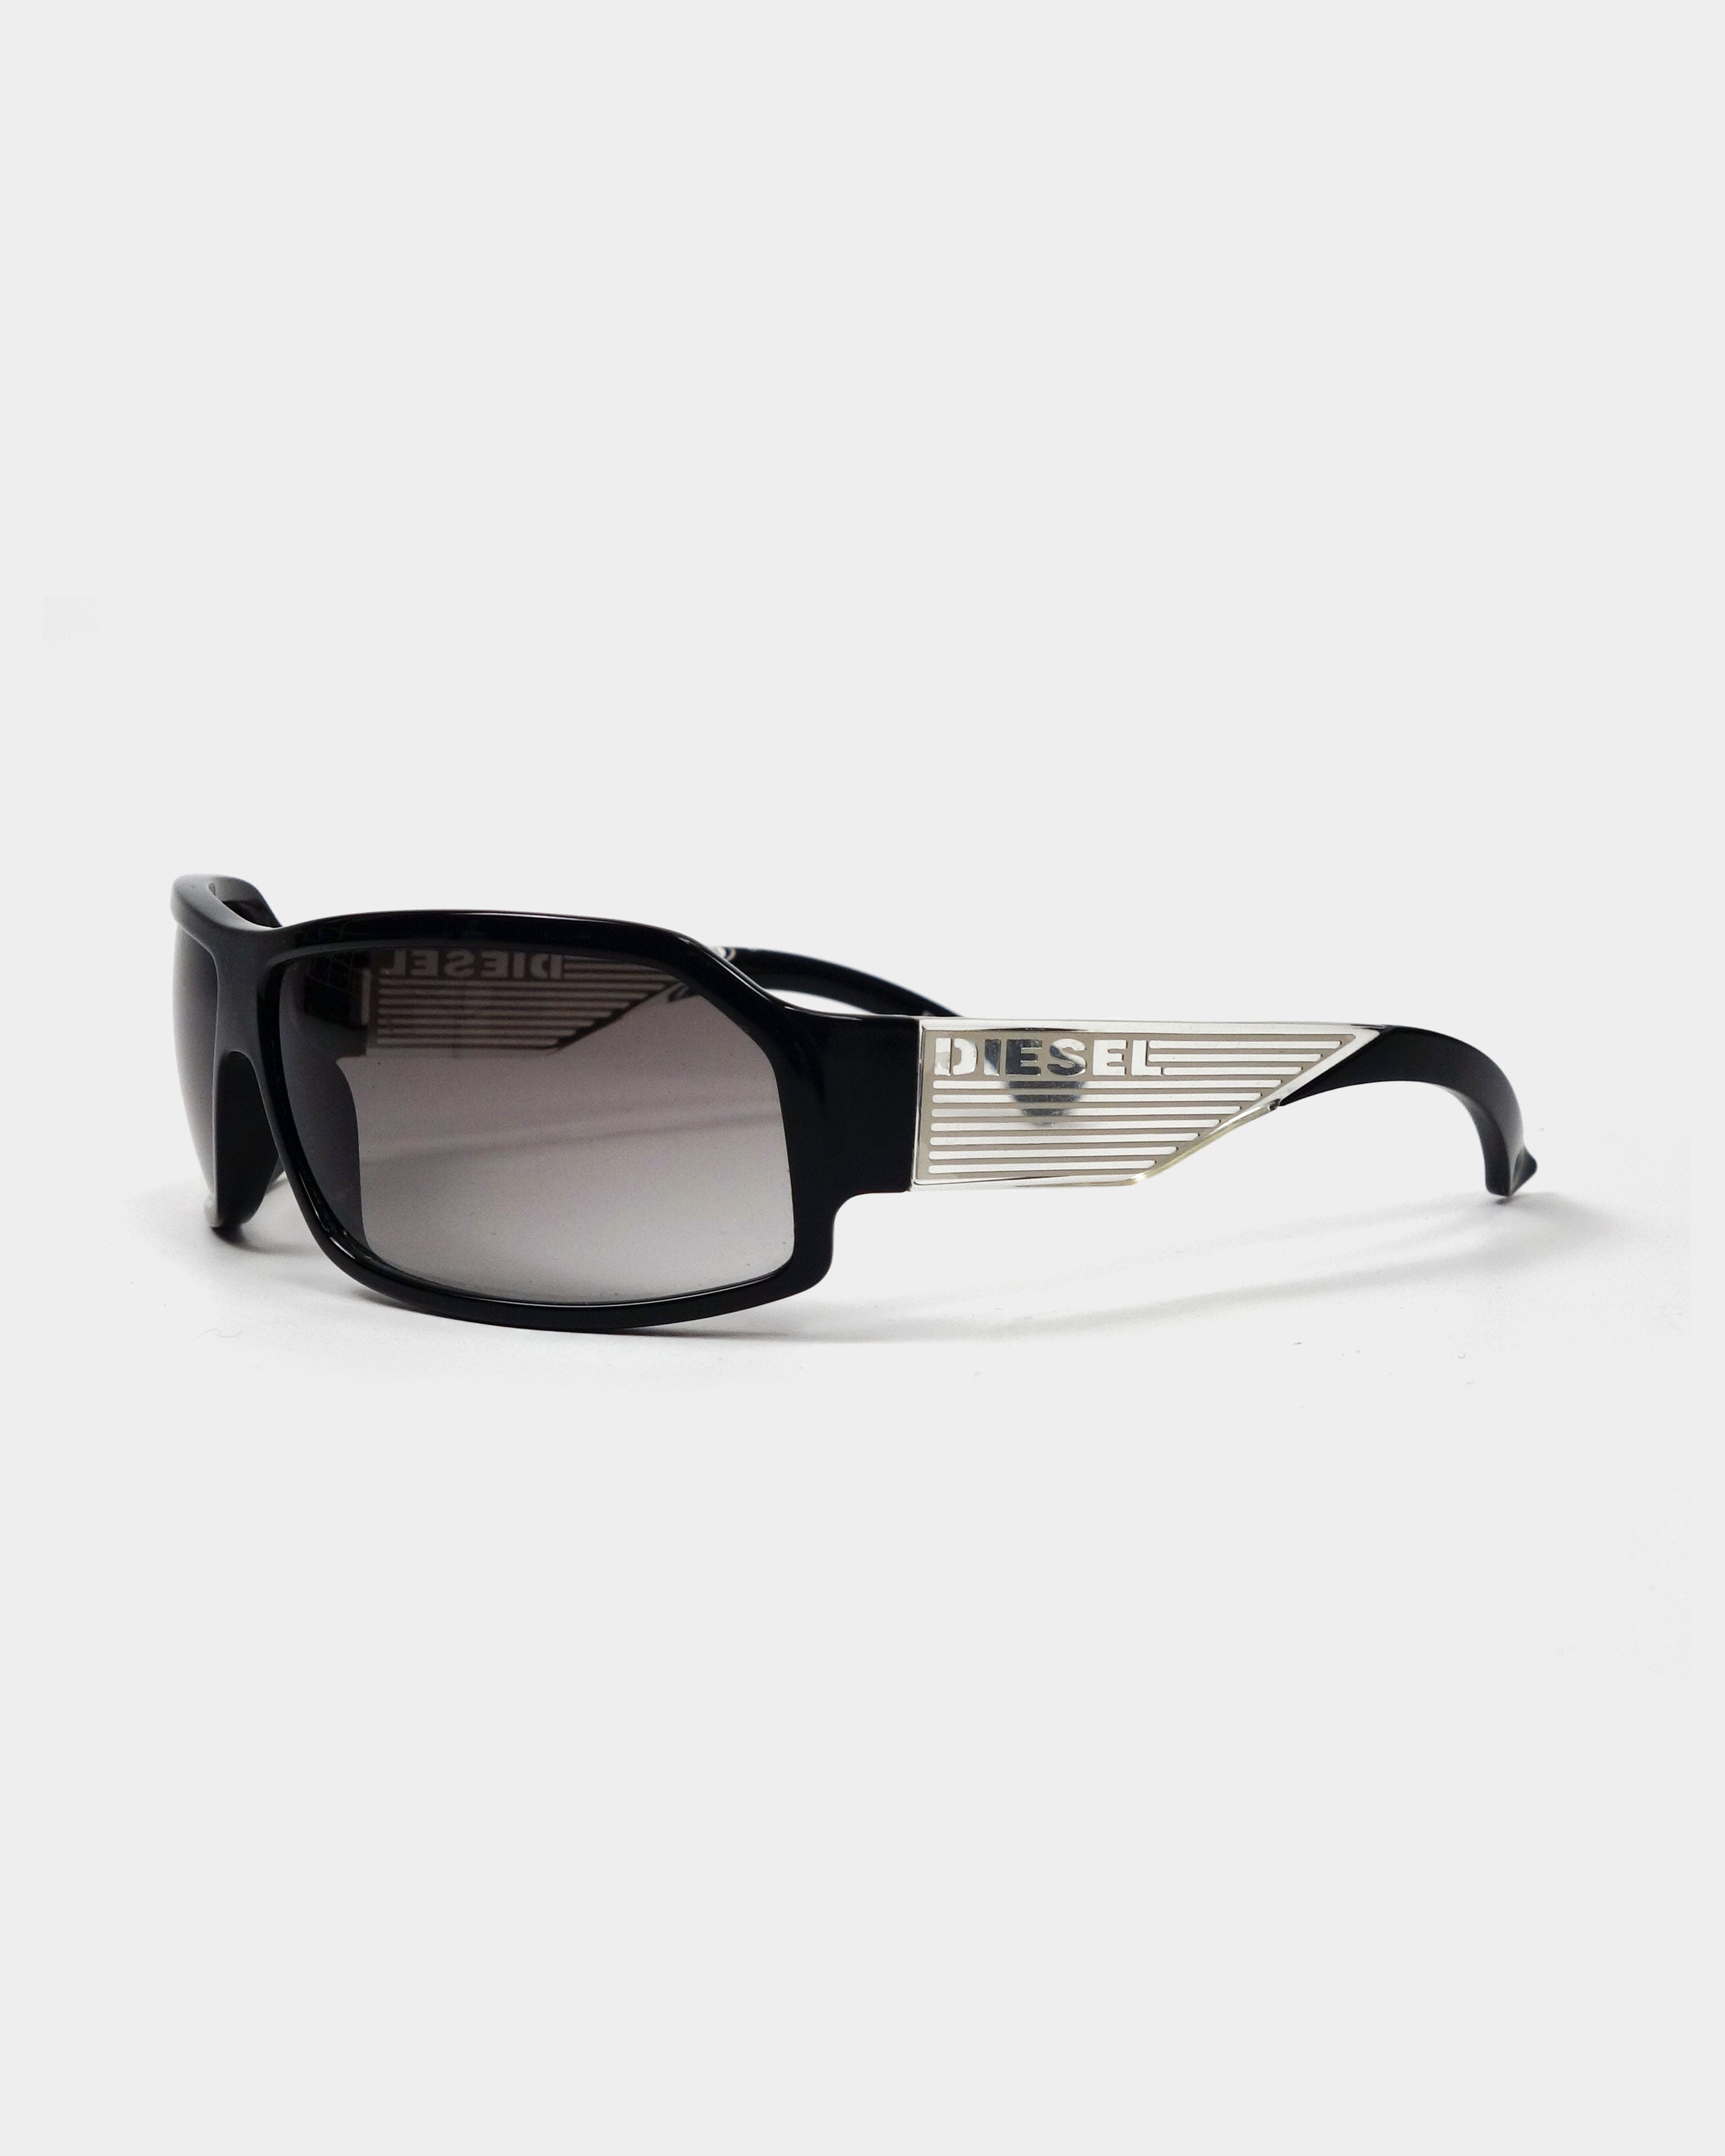 Diesel Clips Black & Grey Sunglasses 2000's – Vintage TTS